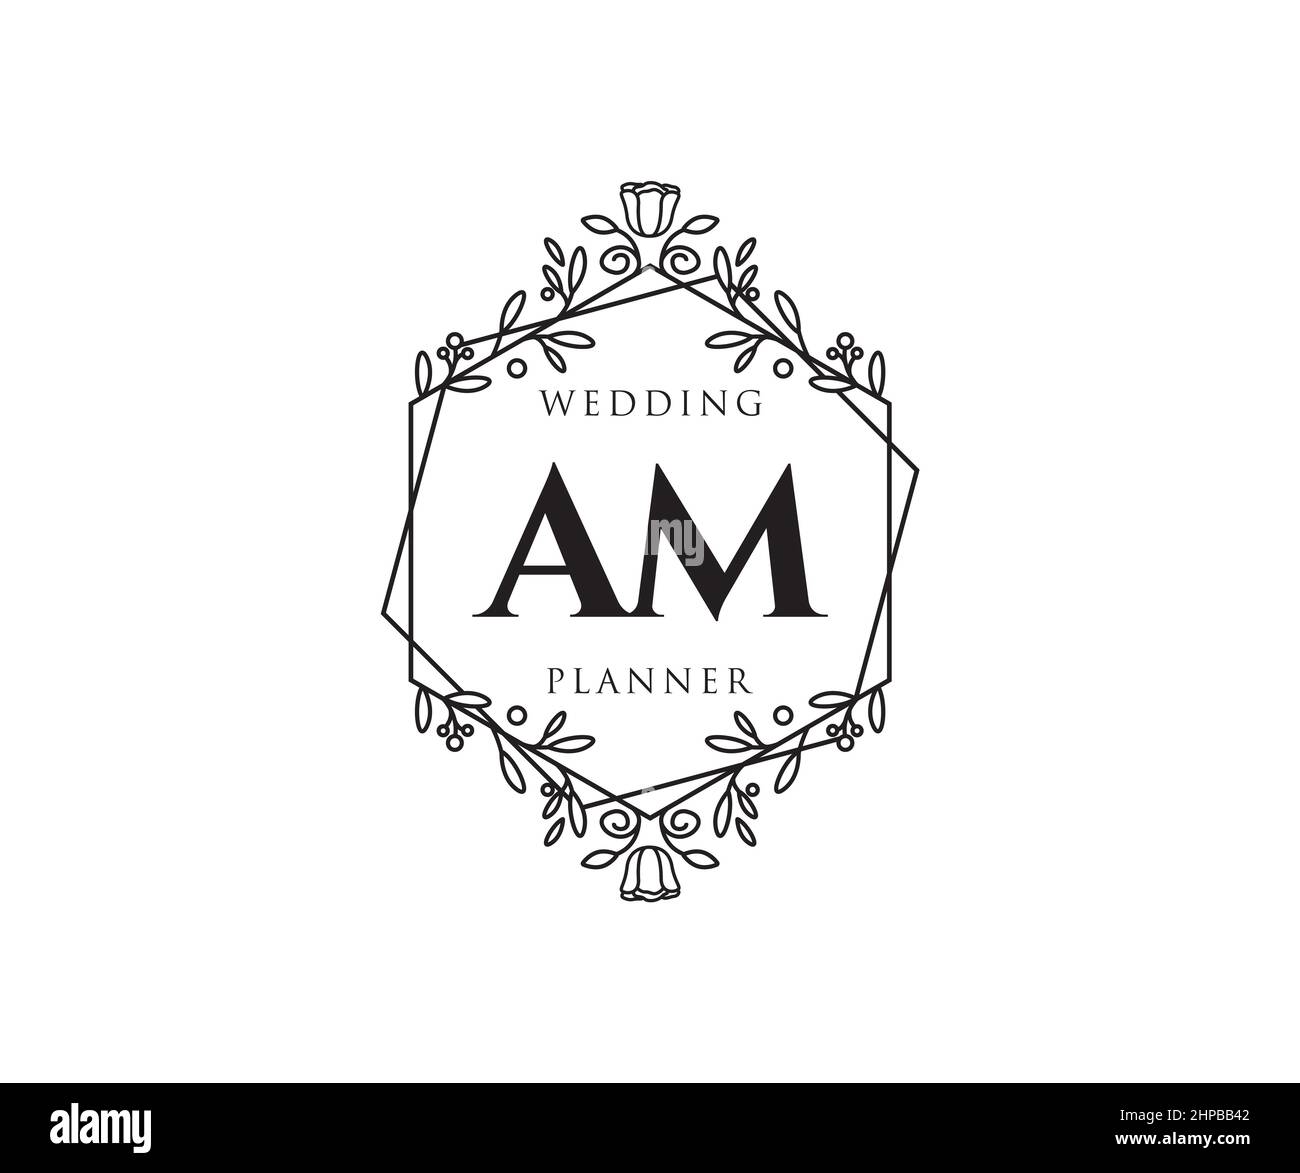 Elegant, Serious, Wedding Logo Design for M & M by adorachloe